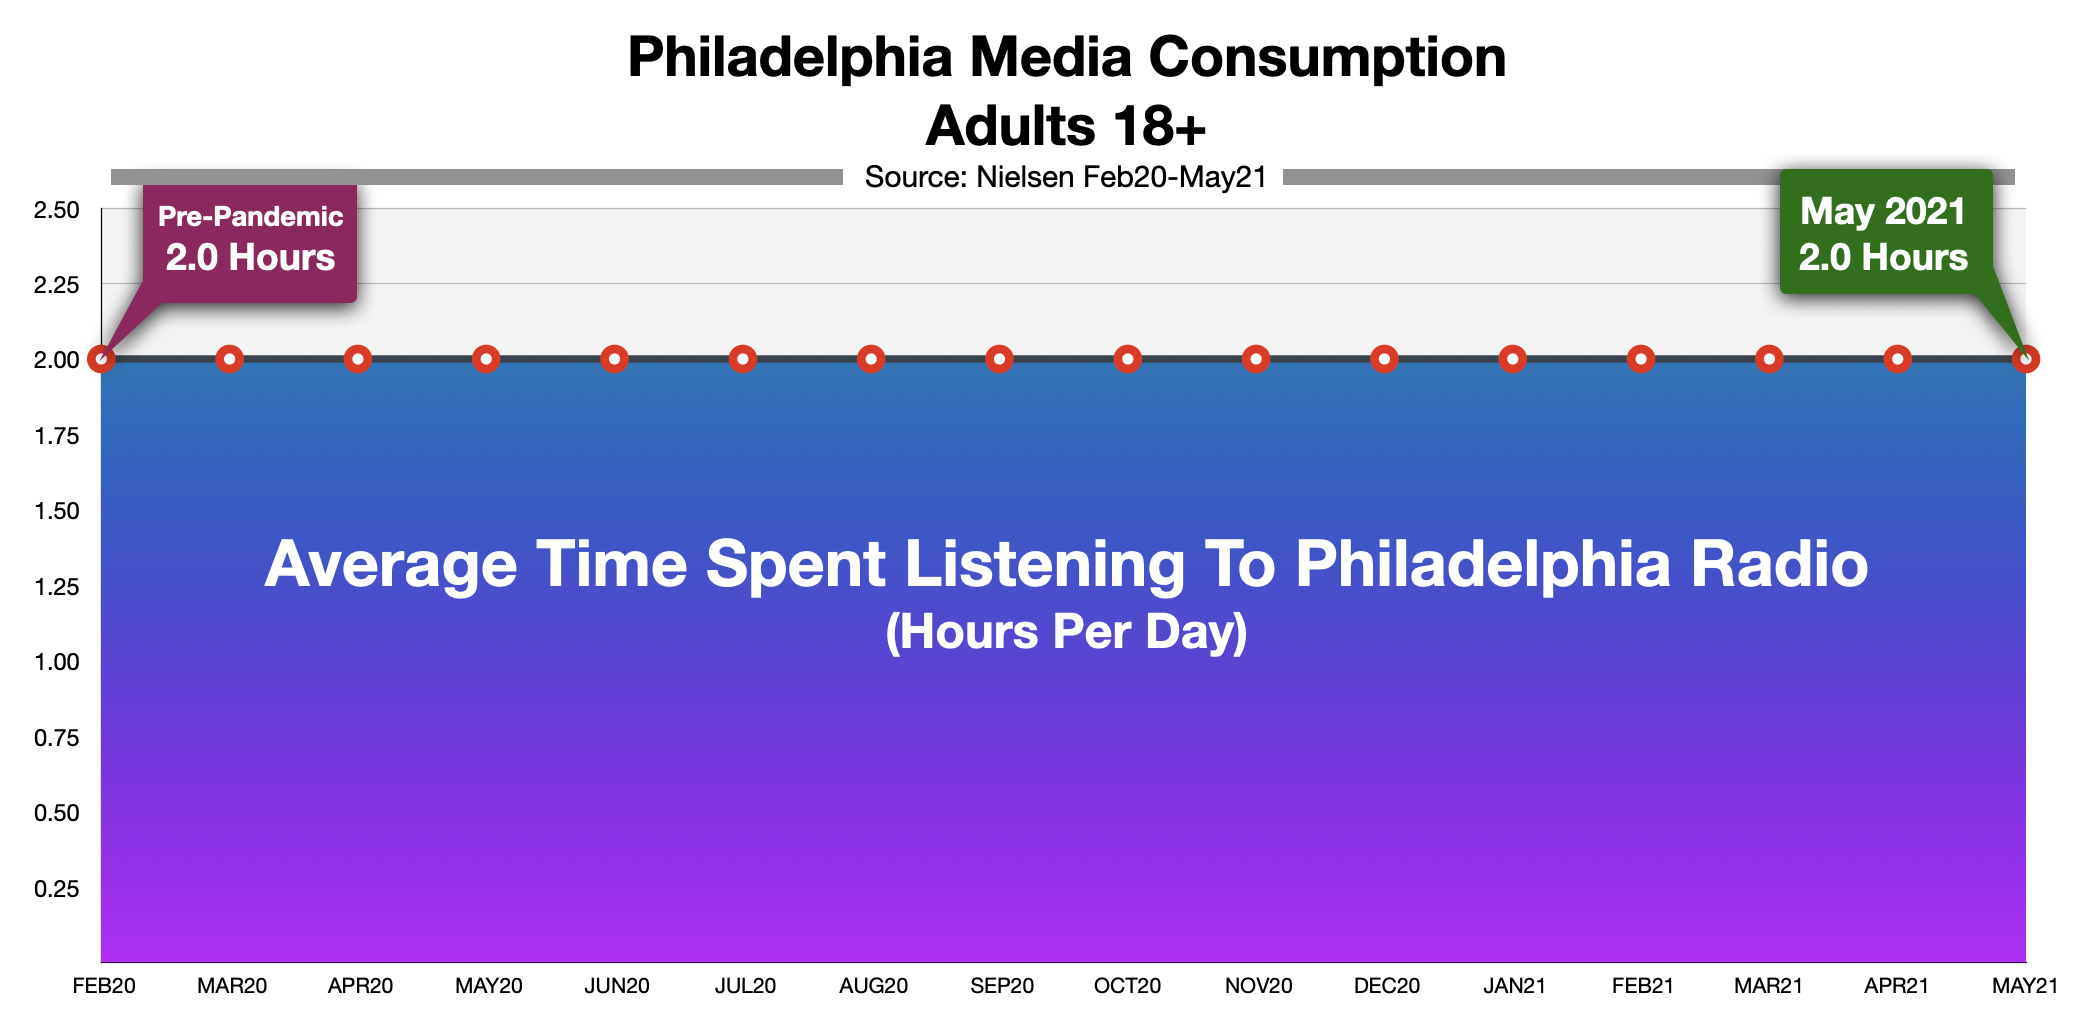 Advertising On Philadelphia Radio: Time Spent Listening May 2021